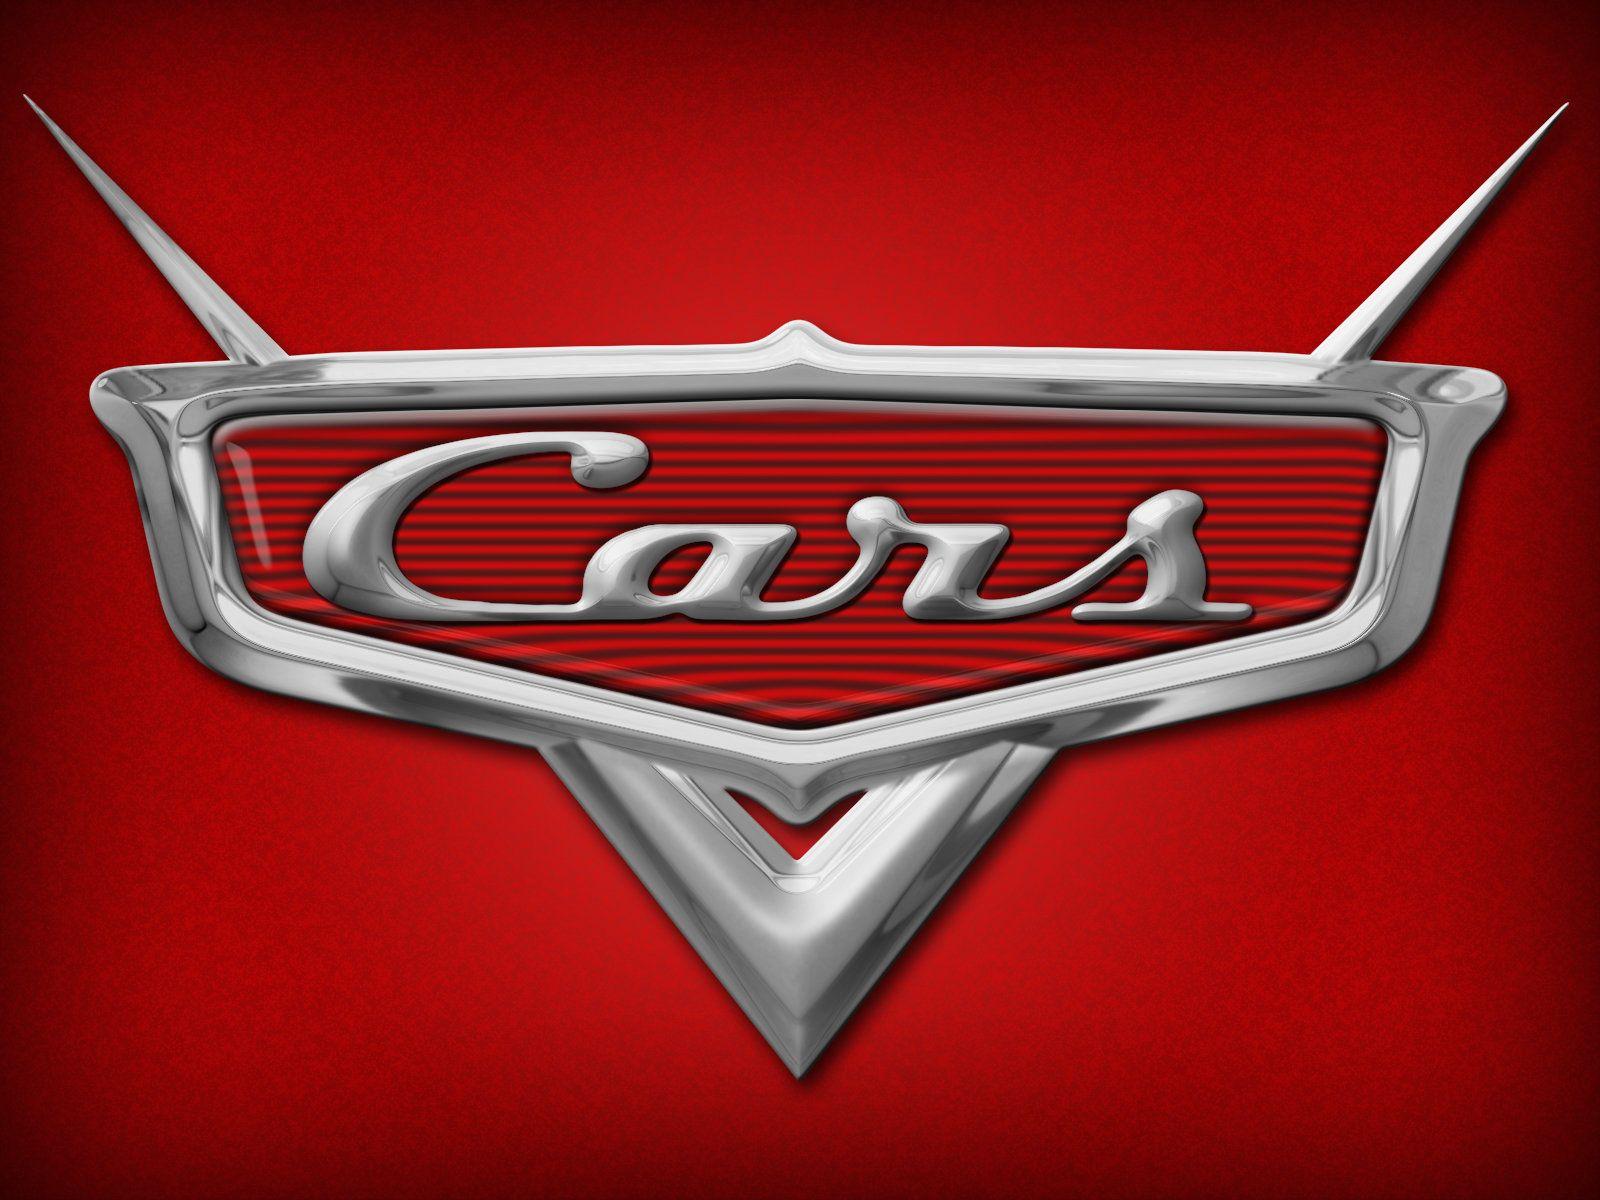 Disney Cars 2 Logo - Cars Logo PSD by vicing on DeviantArt